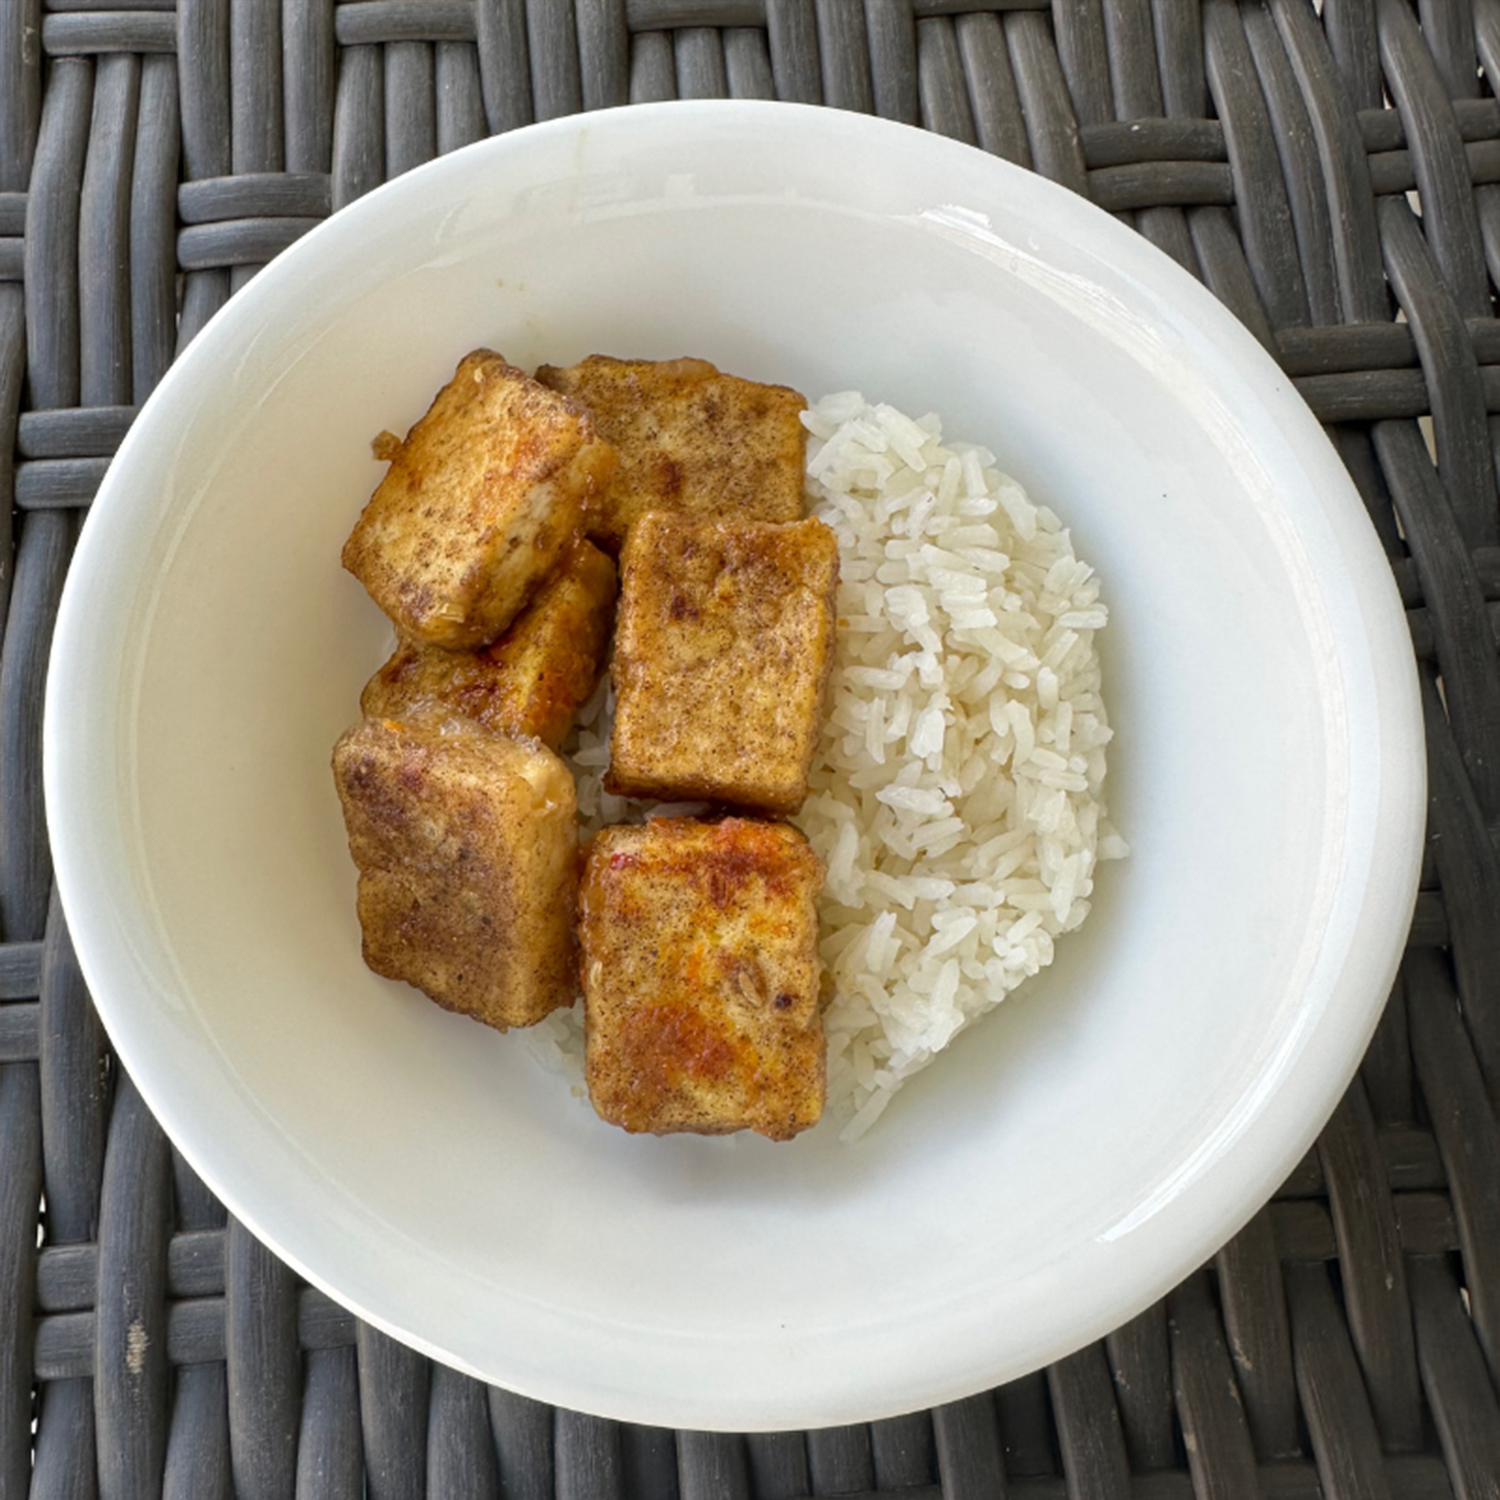 Orange Tofu